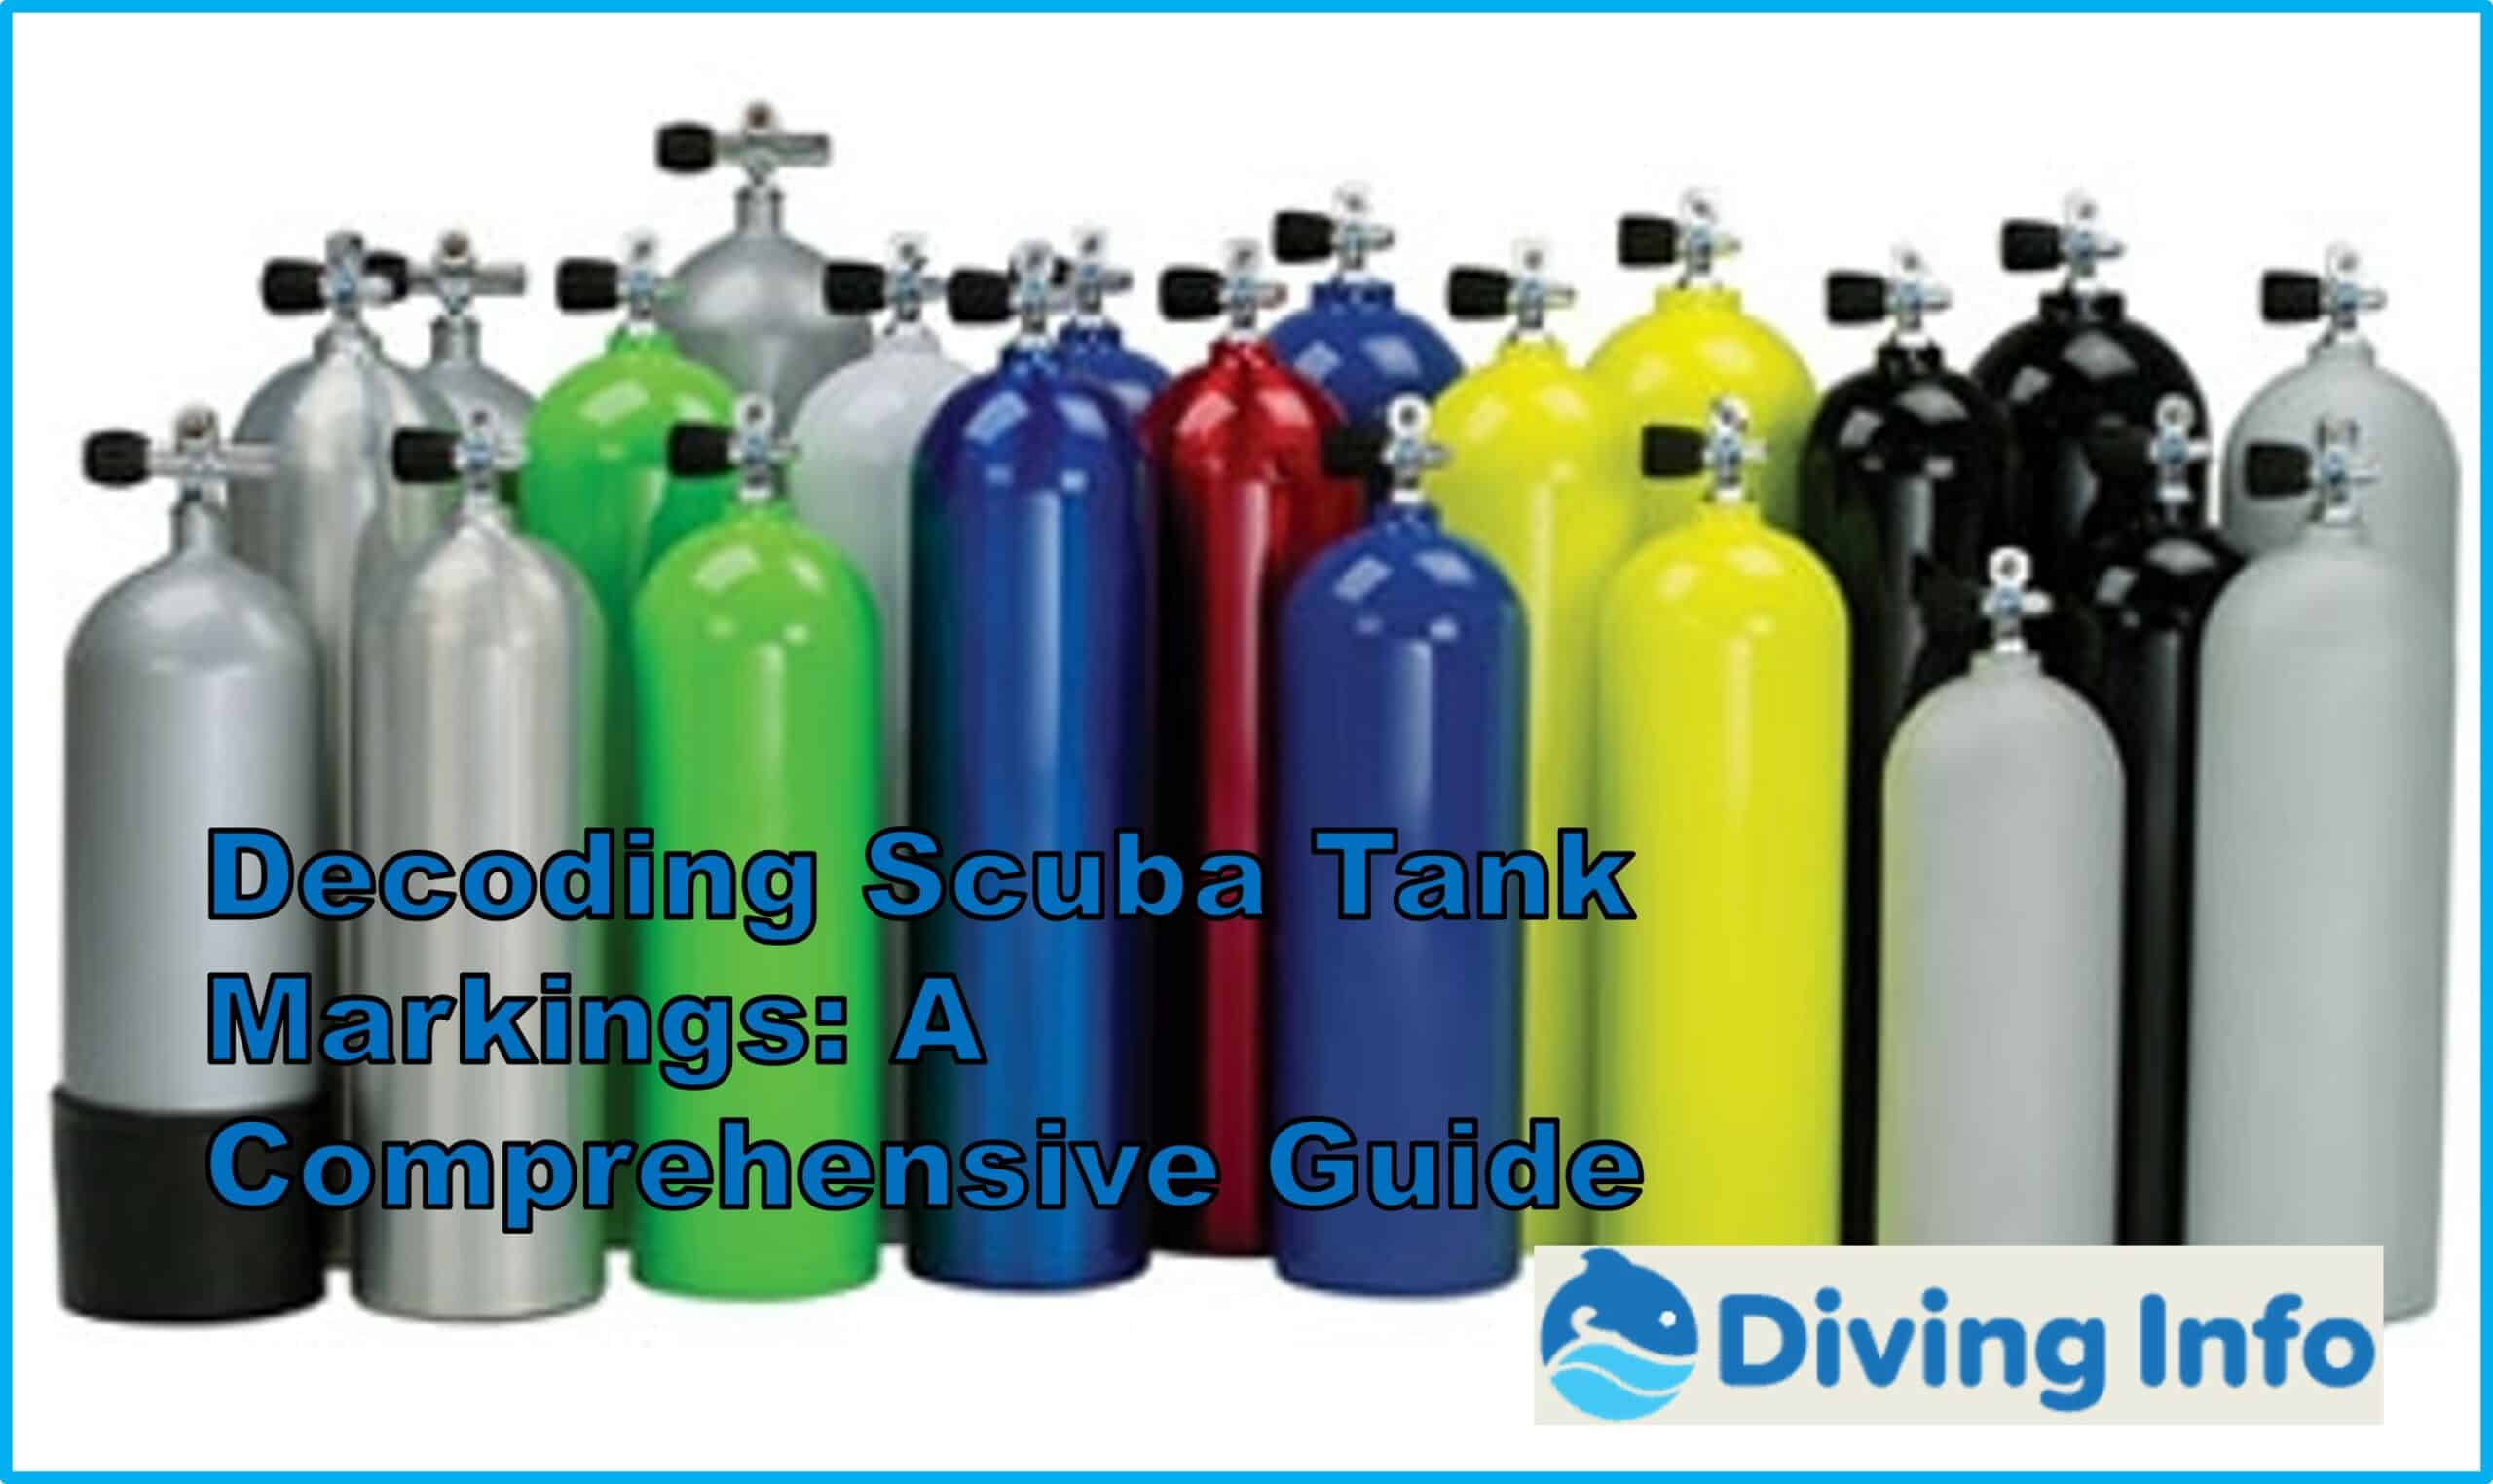 Decoding Scuba Tank Markings A Comprehensive Guide